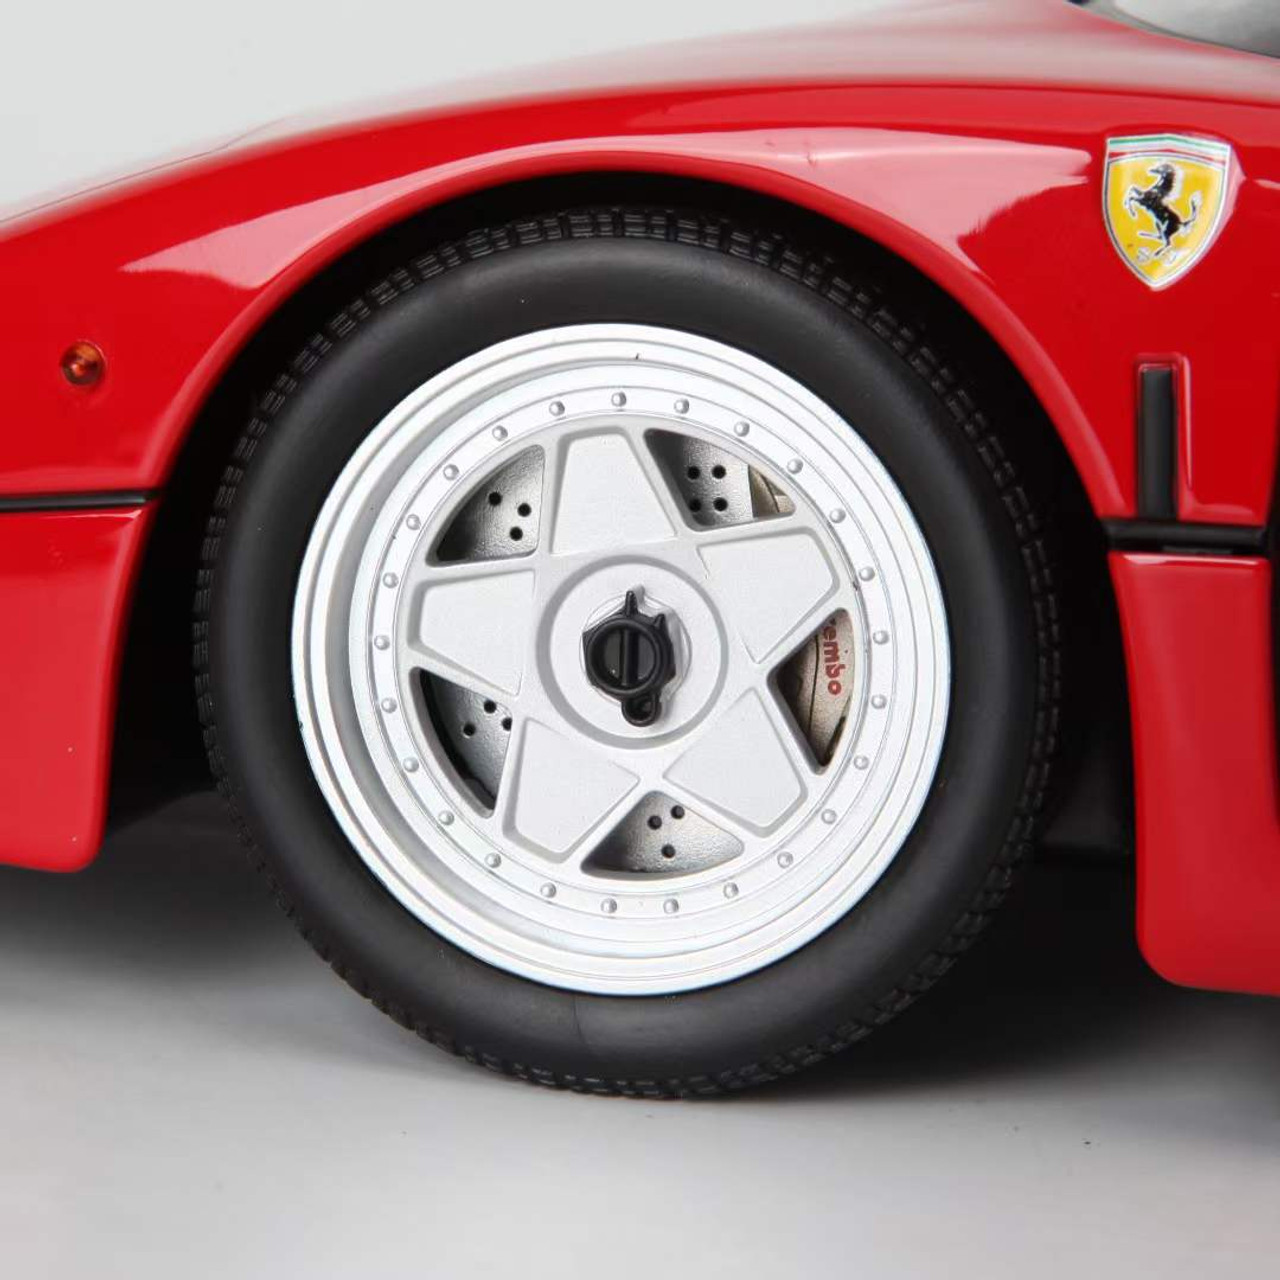 1/12 Norev 1987 Ferrari F40 (Red) Diecast Car Model